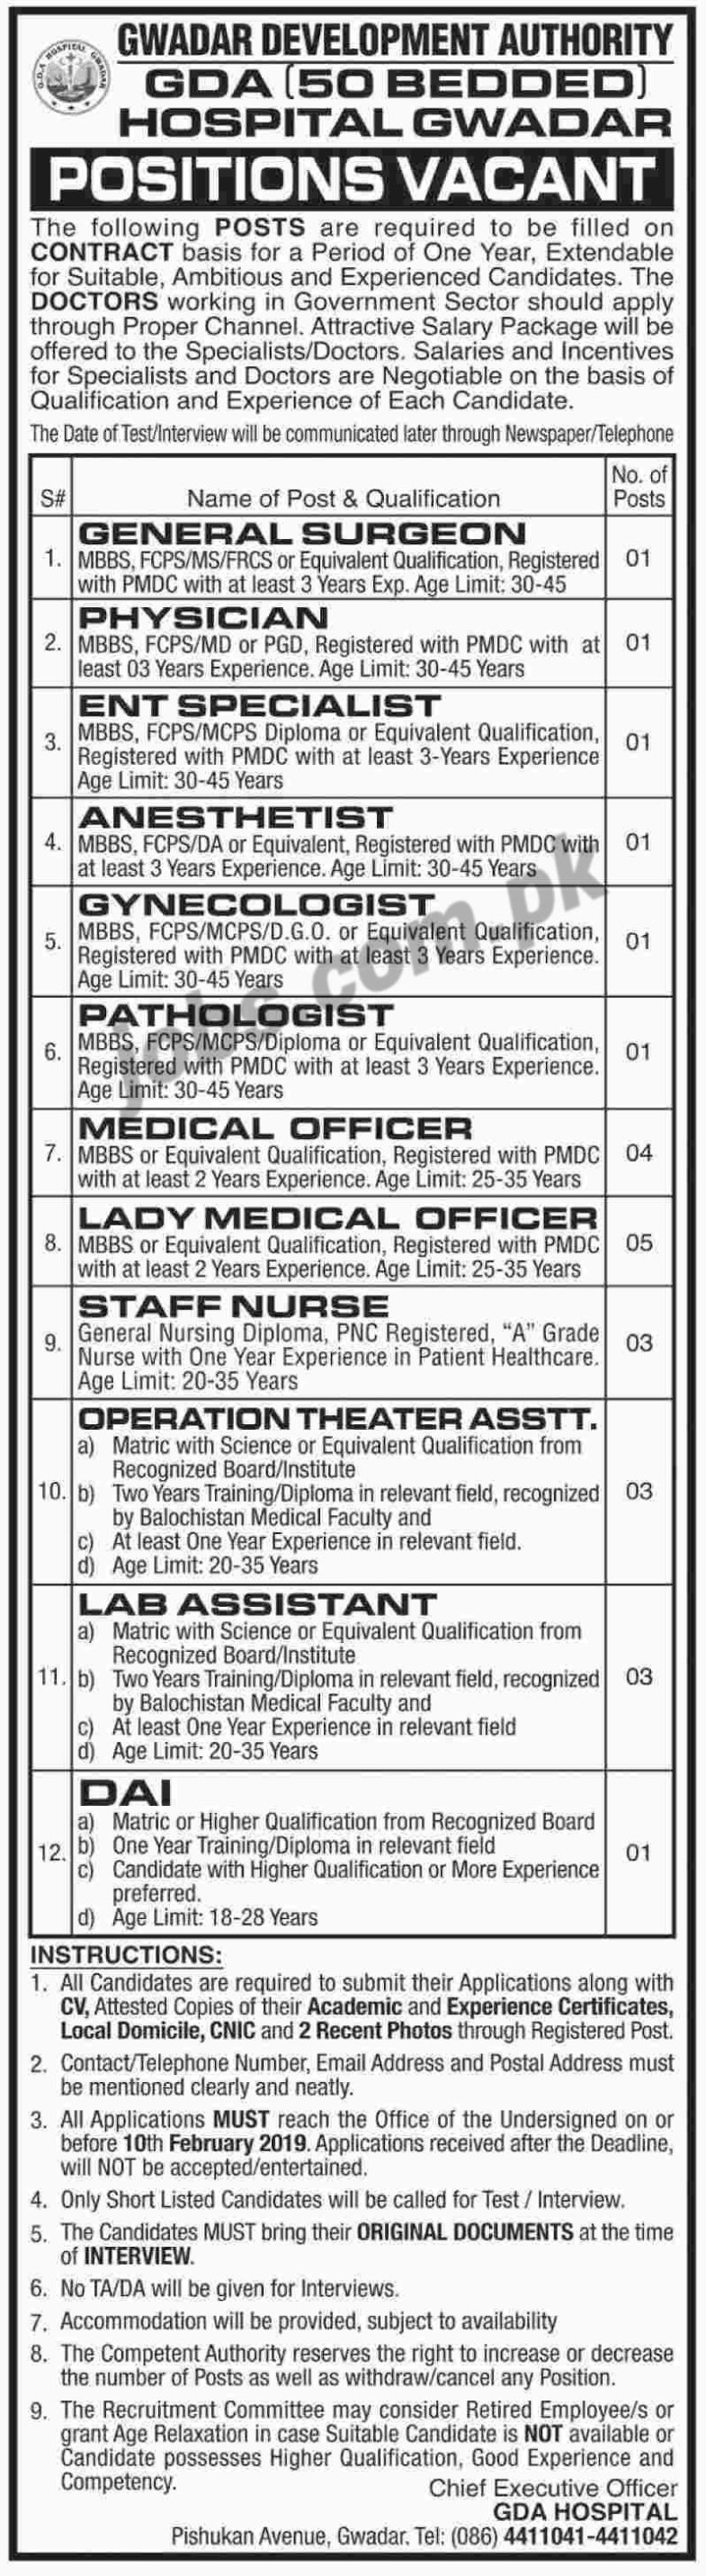 Gwadar Development Authority (GDA) Jobs 2019 for 26+ Medical / Para Medical Staff